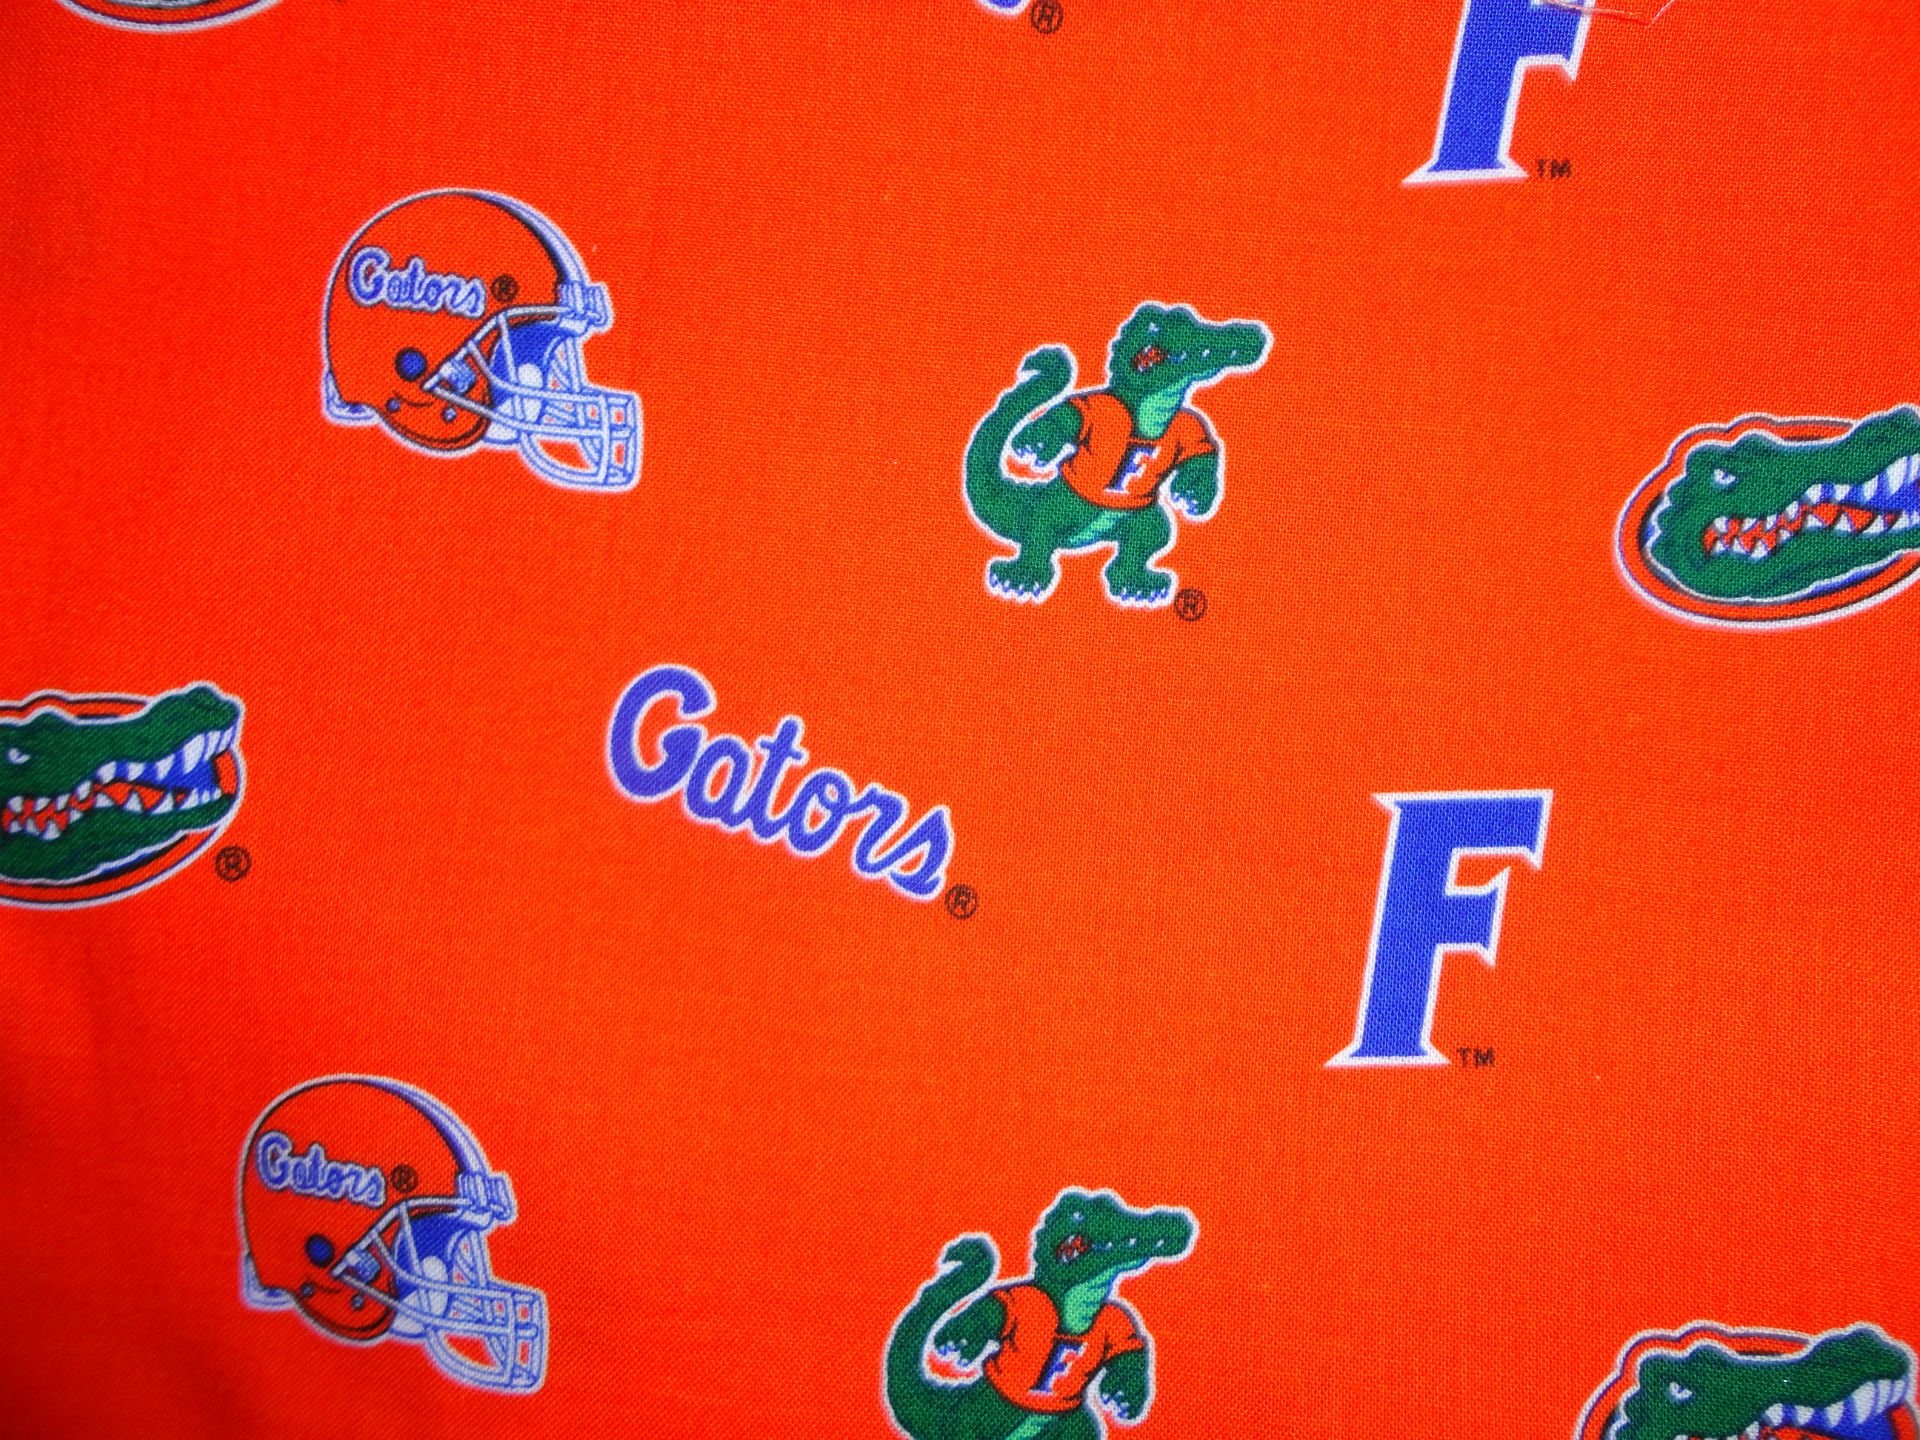 1920x1440 Free Download Amazing Florida Gators Football Images Florida Gator  Screensavers and Wallpaper ...